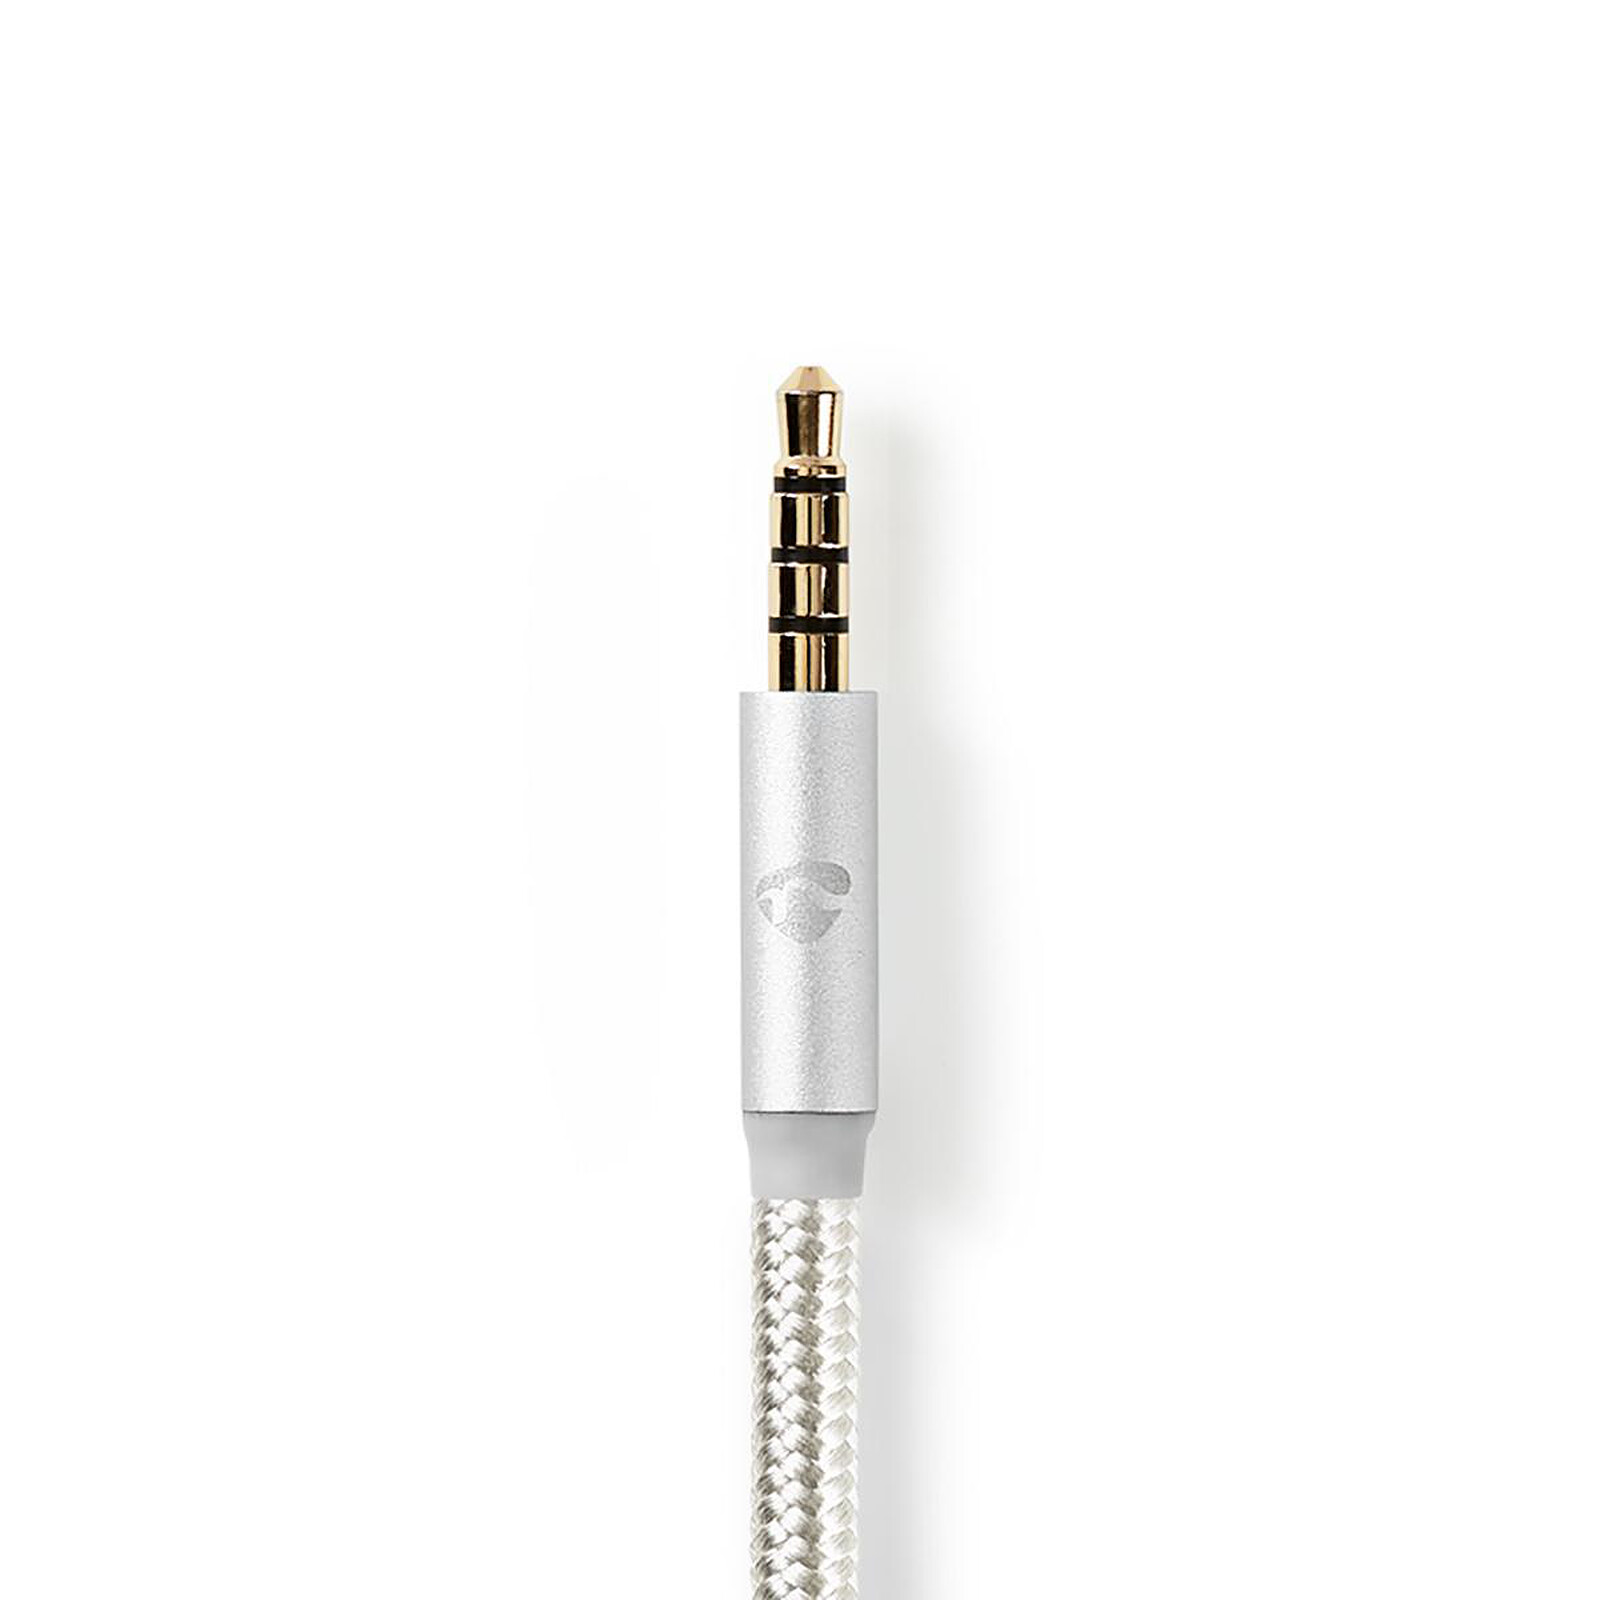 Rallonge audio Jack 3.5 mm stéréo mâle/femelle (5 mètres) - Câble audio Jack  - Garantie 3 ans LDLC